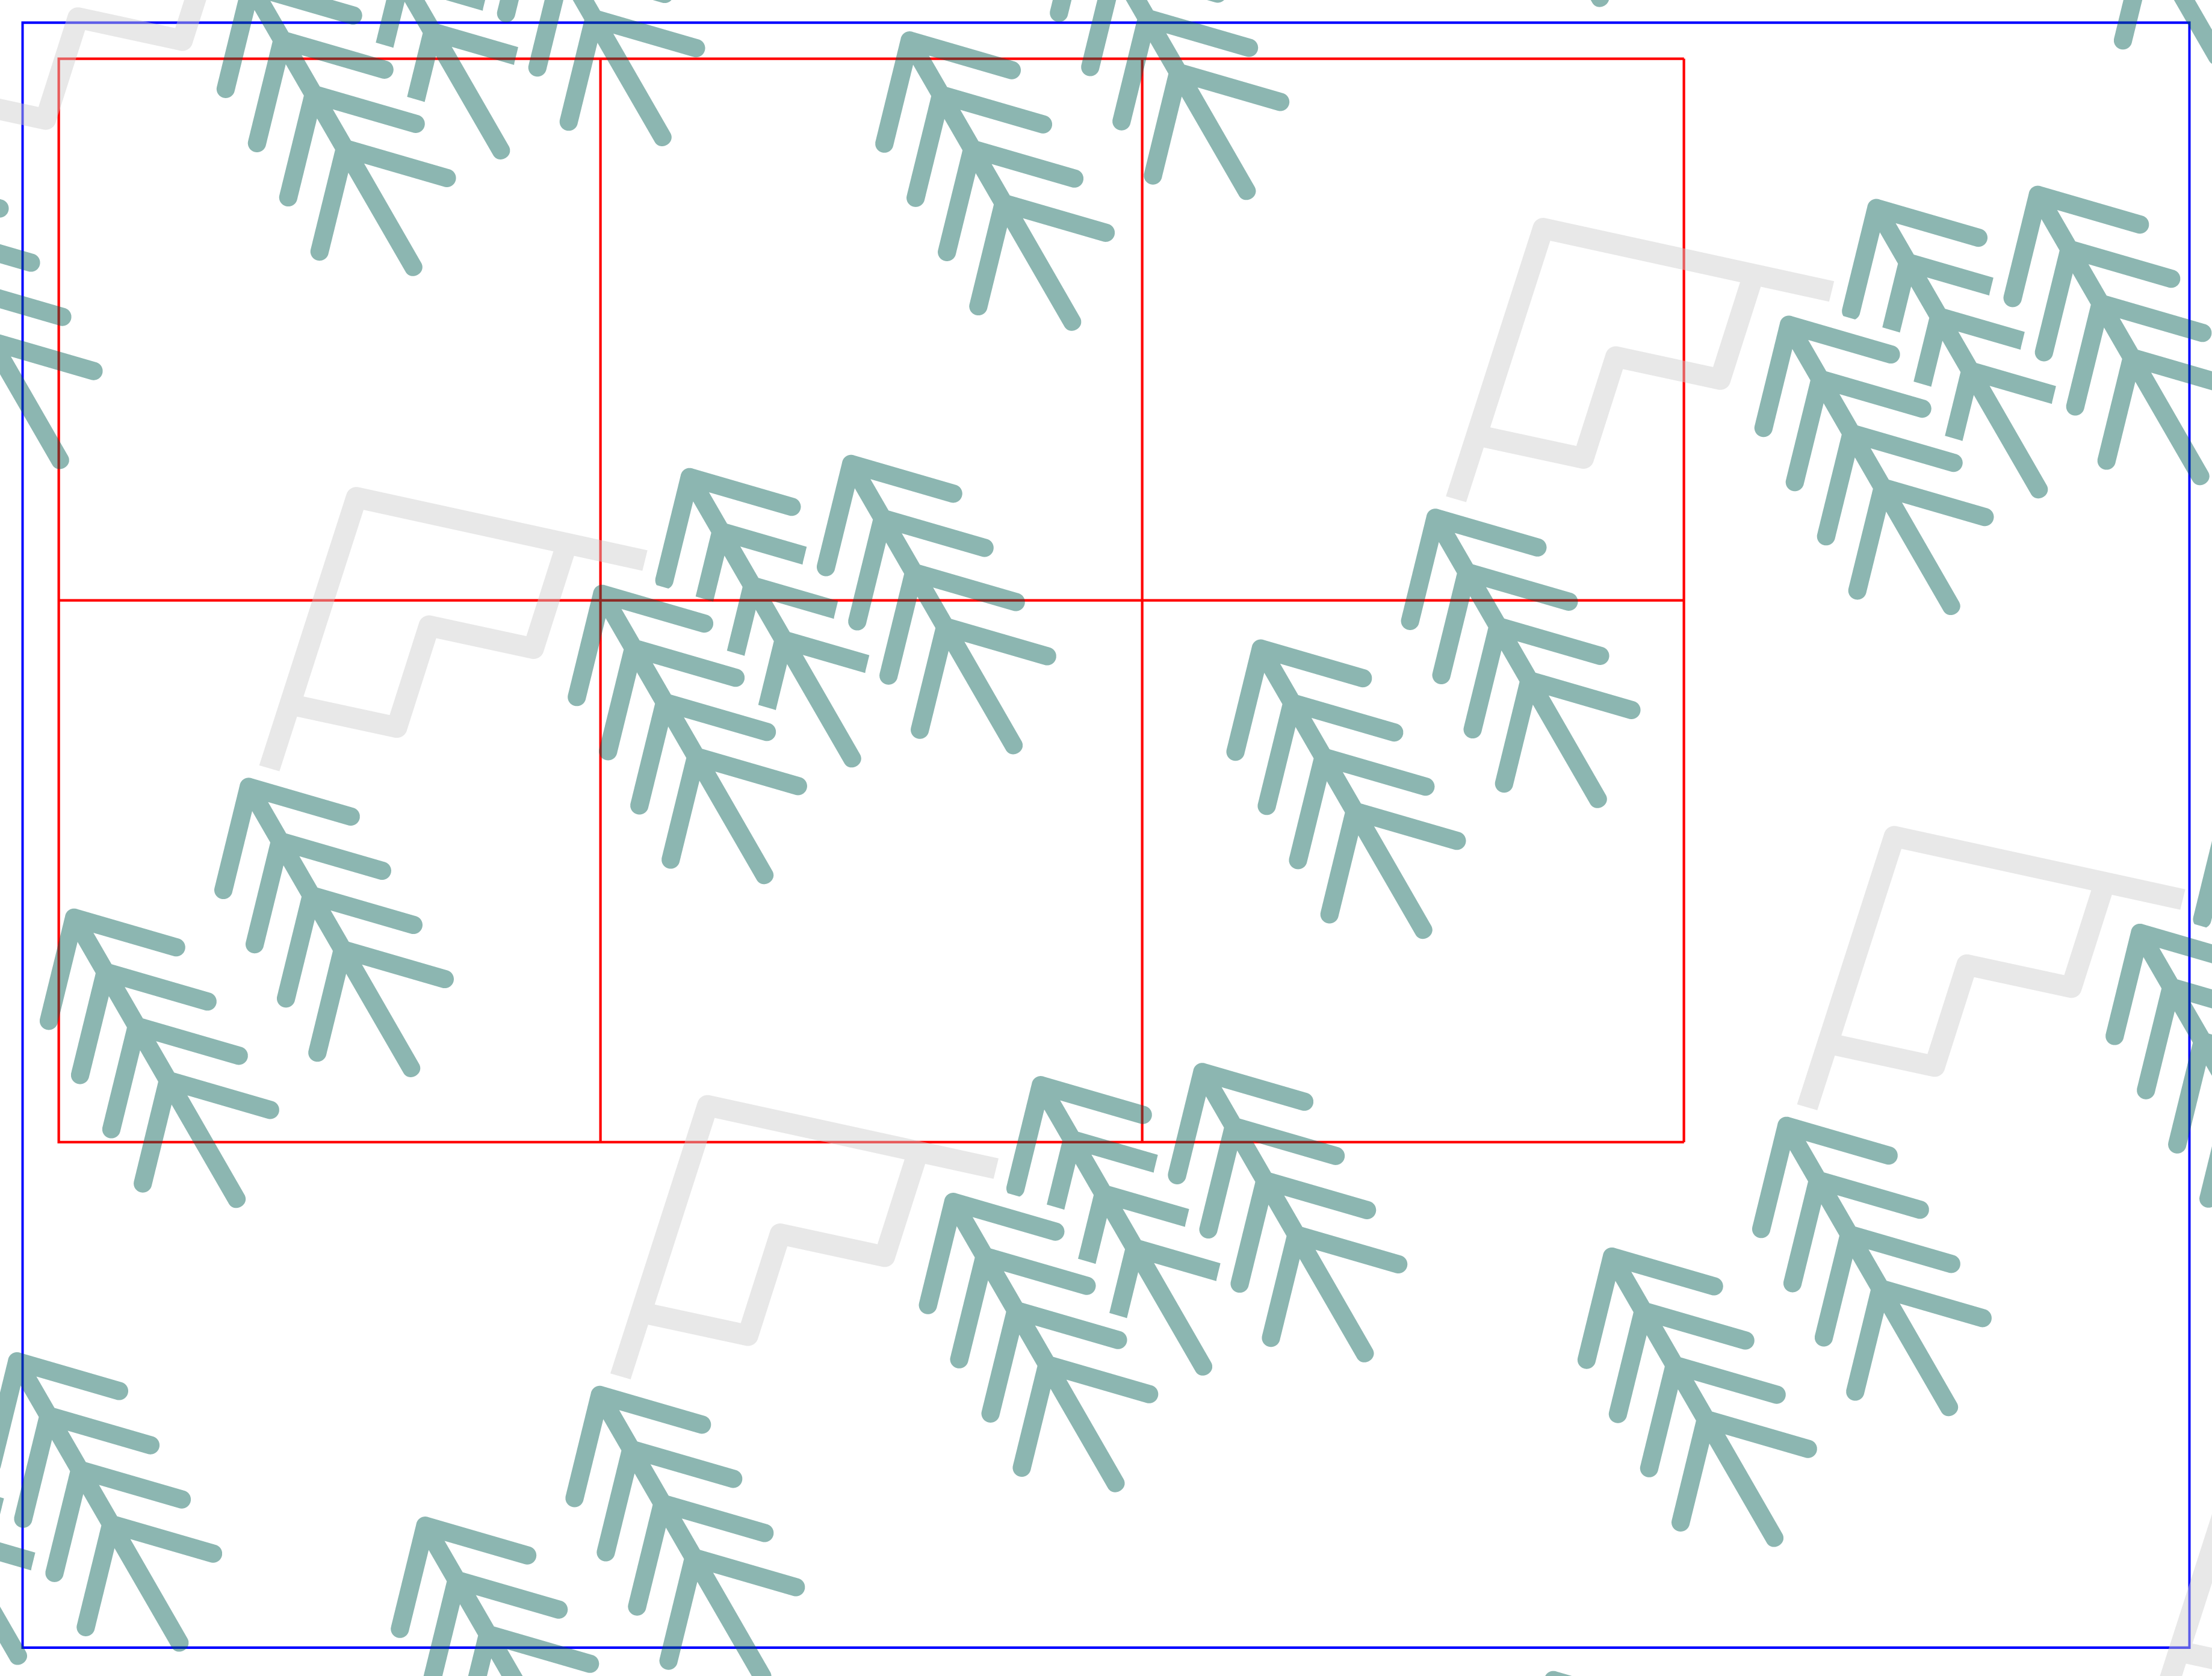 Digital Laser Cutting Template: 3" x 3" Rectangles - 12" x 9" Sheet Size Digital Laser Engraving Files Craftworks NW 